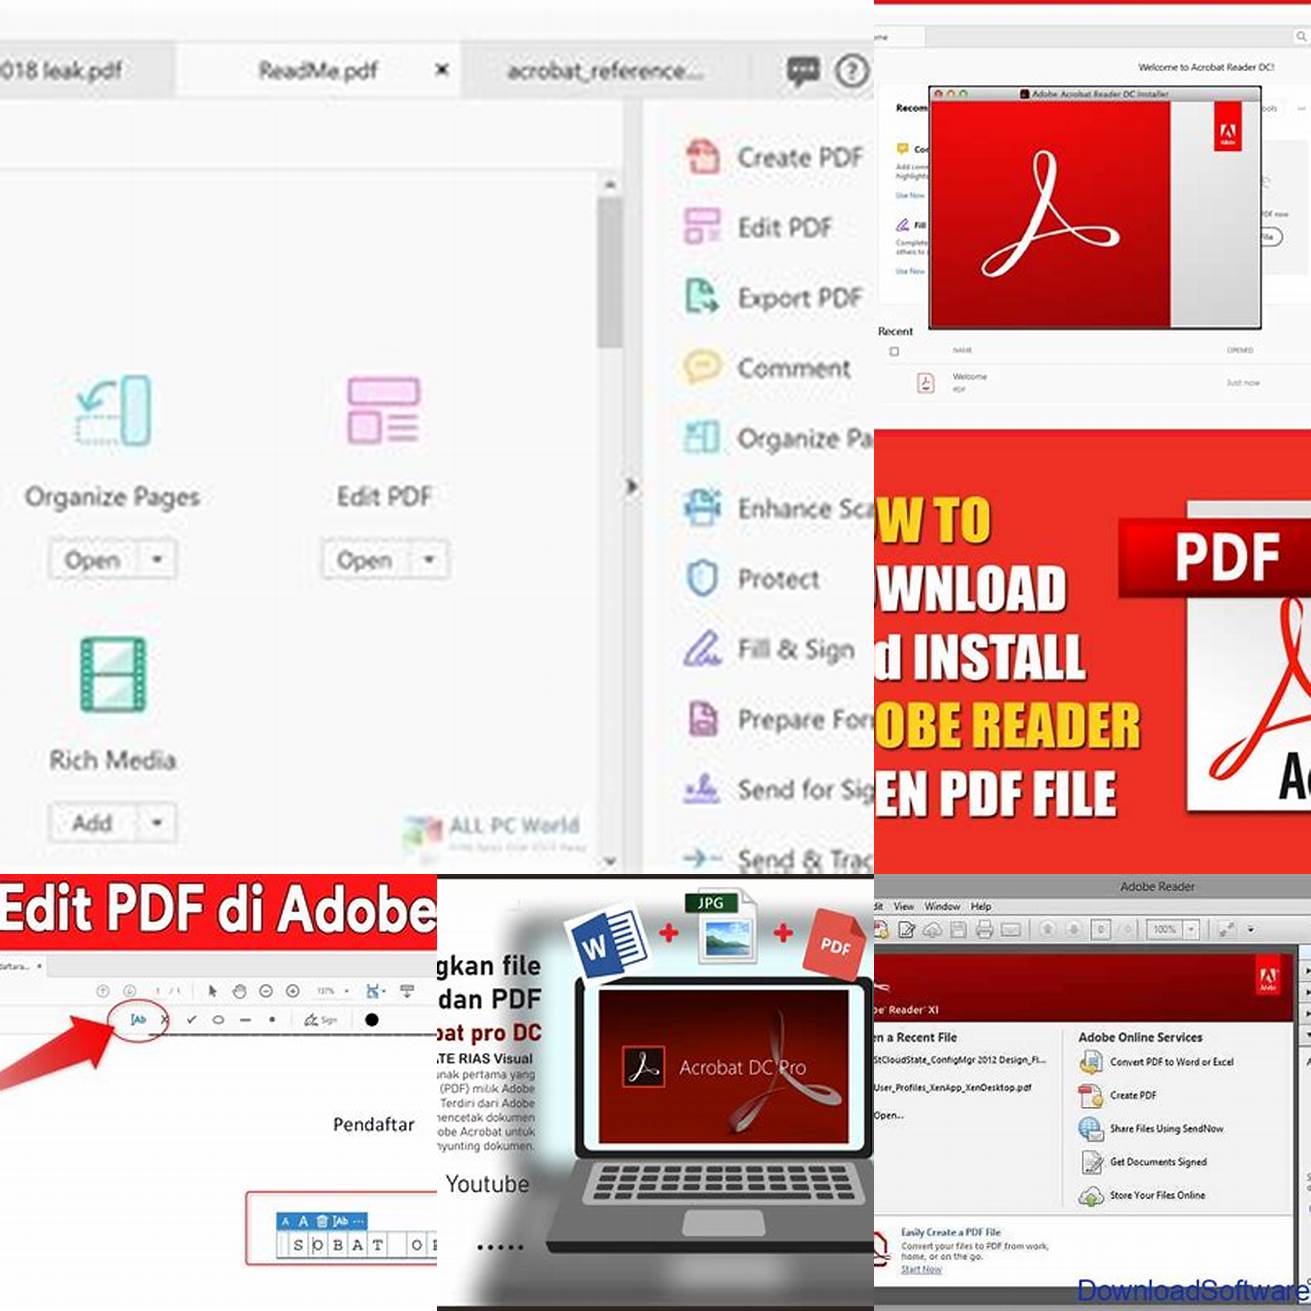 1 Buka aplikasi Adobe Acrobat atau aplikasi PDF editor lainnya